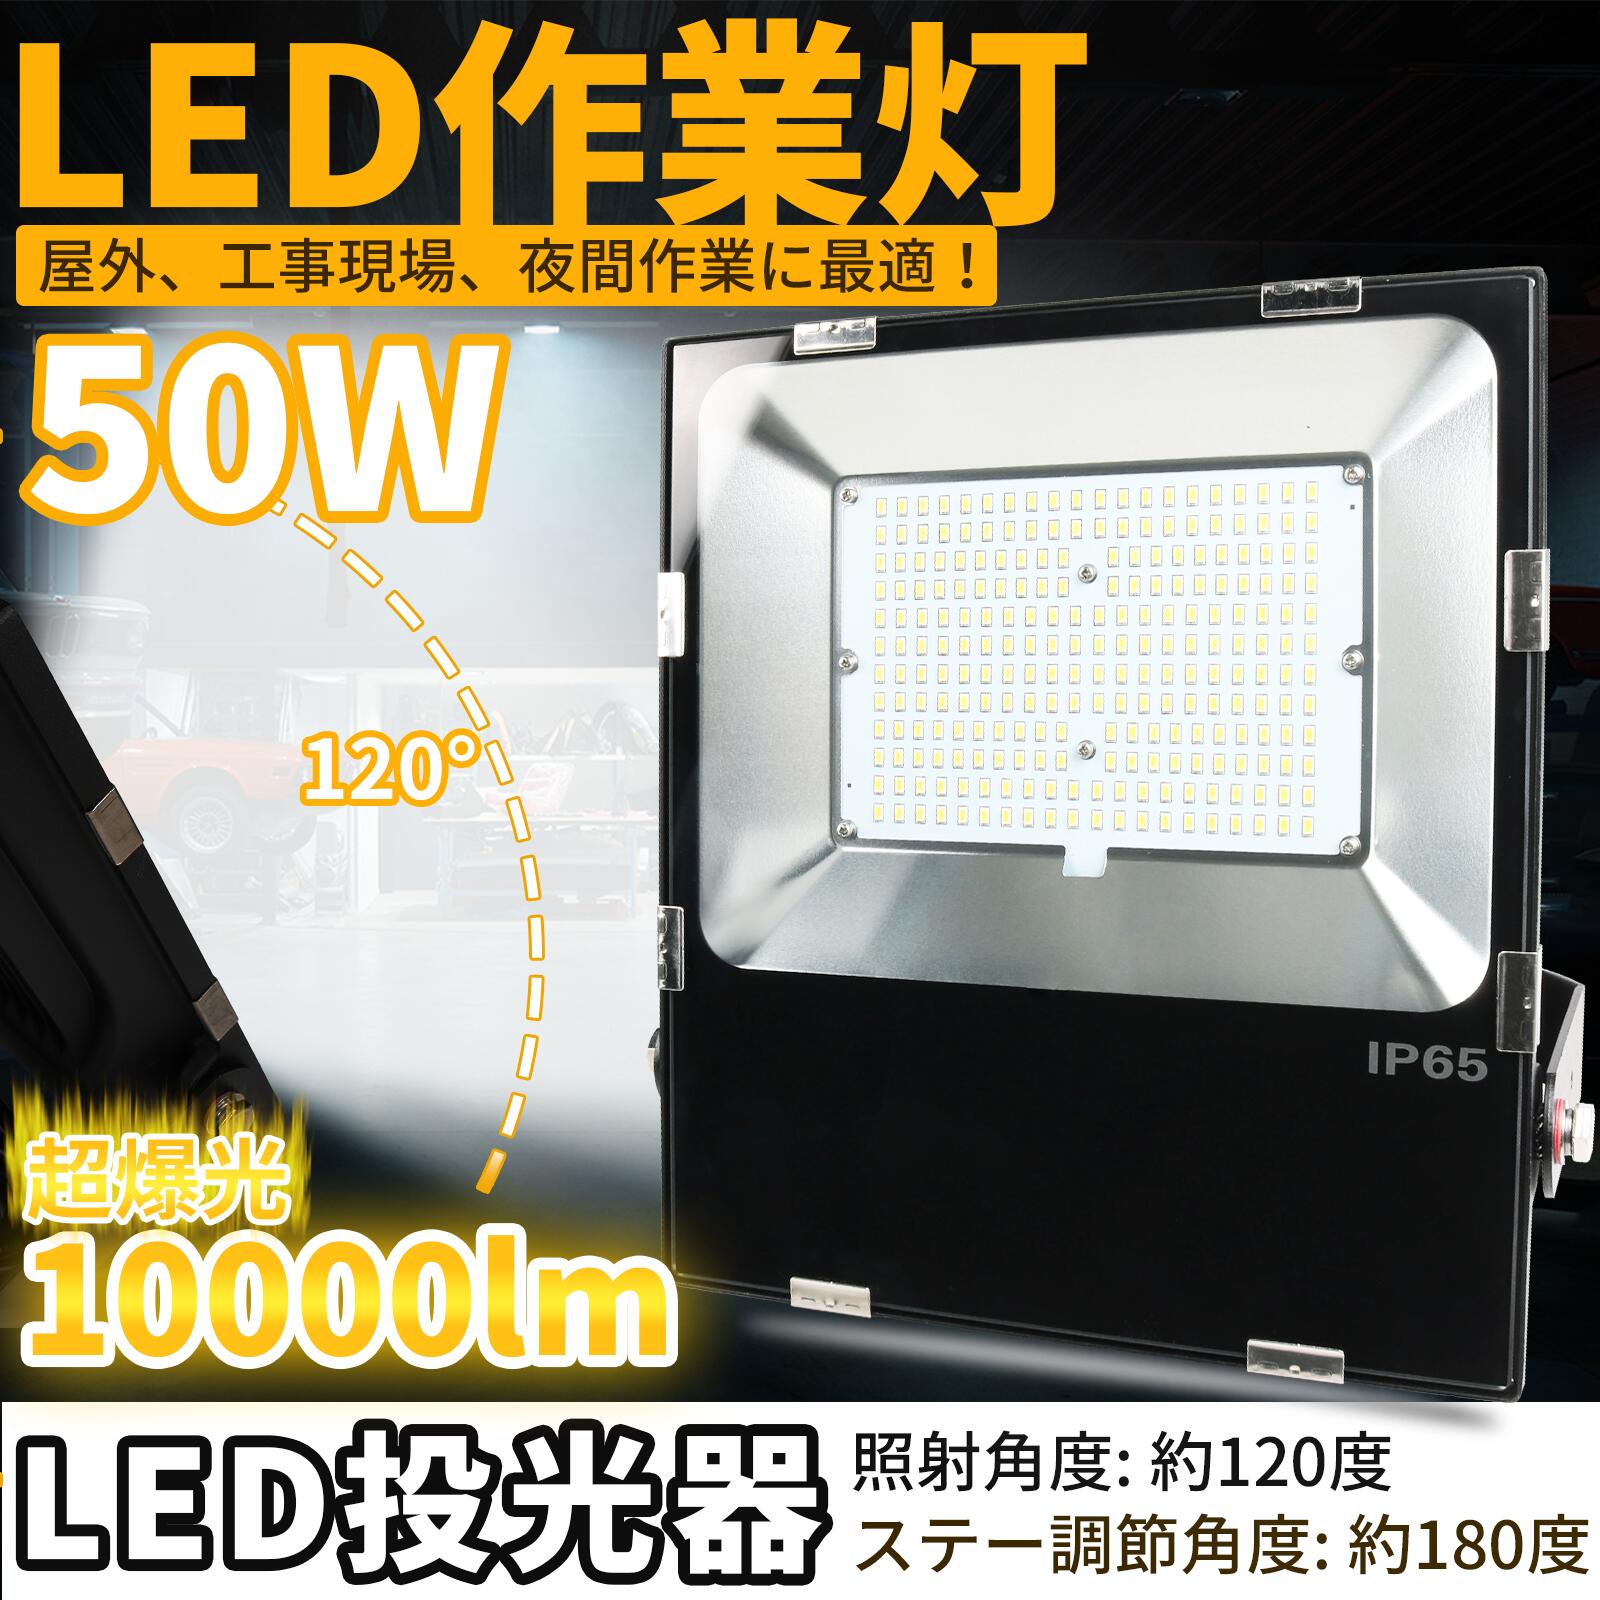 LED作業灯 投光ライト 薄型 軽量 大光量 LED投光器 50W 10000LM AC85~265V 強化ガラスカバー 高防水性 PSE認証済 5m配線コード付 120度照射 調節角度180度 品質保証 1年保証